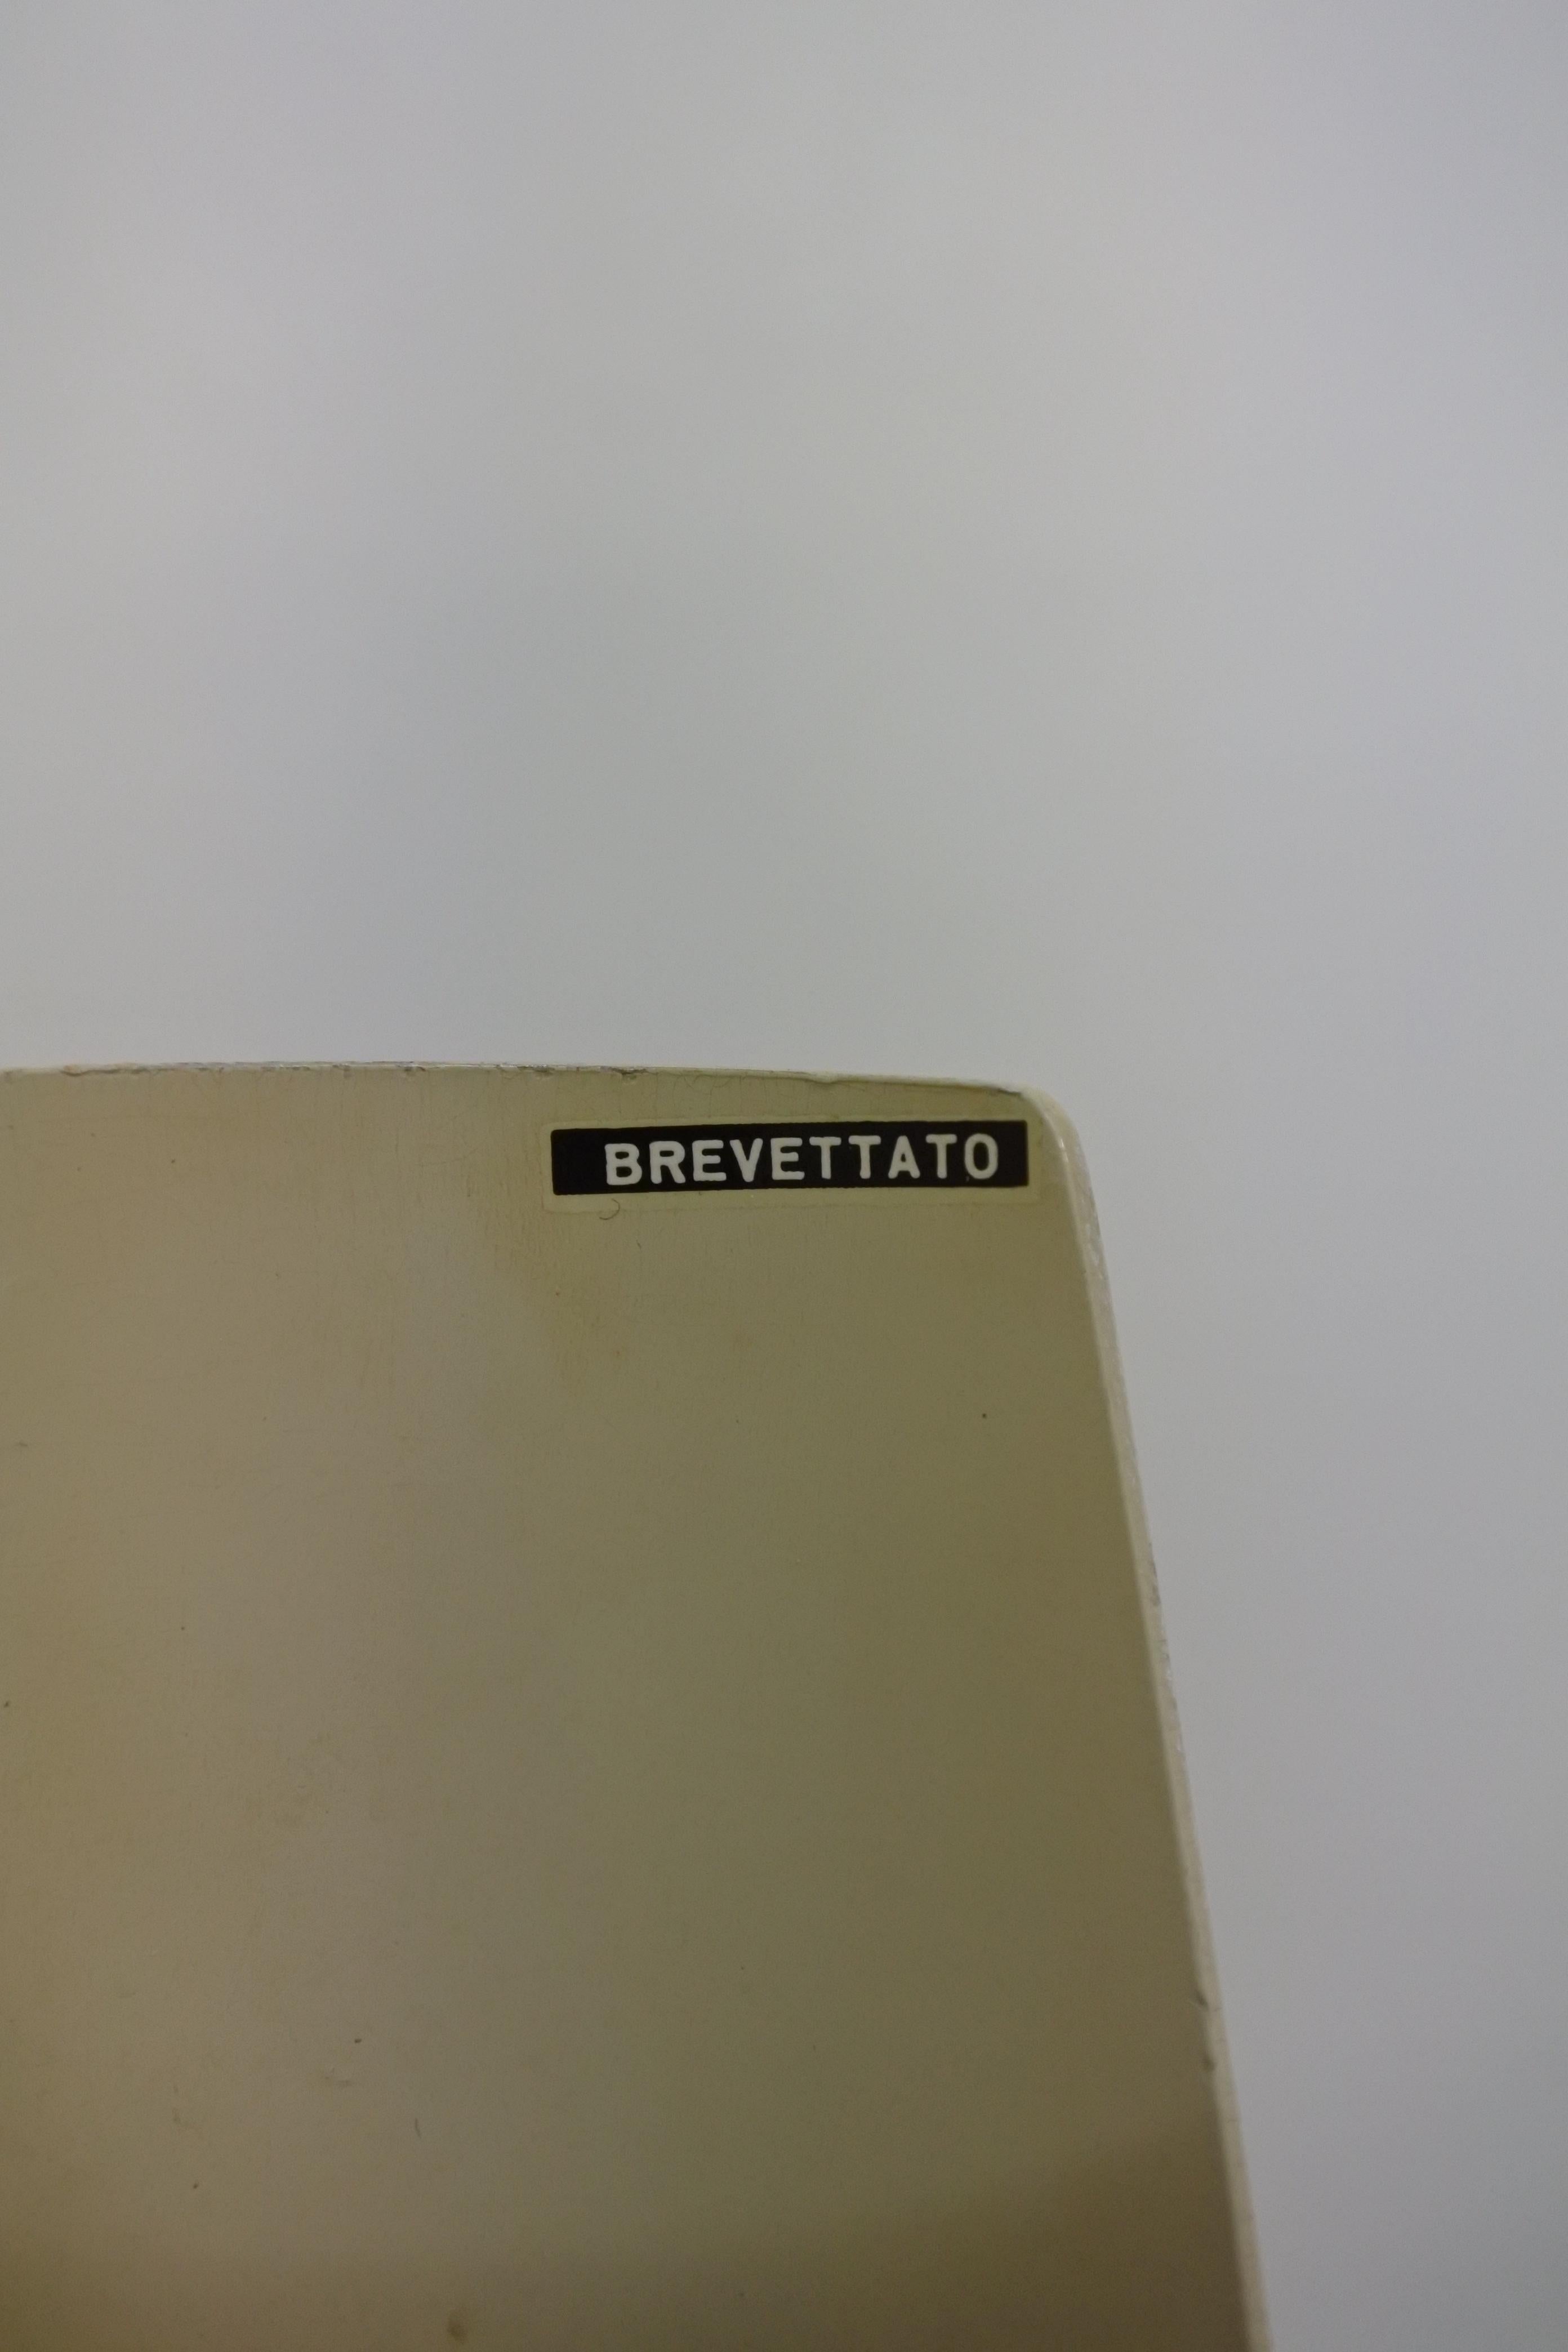 Leather Gino Sarfatti & Arteluce, Early Table Lamp 600/P, Italy, 1966